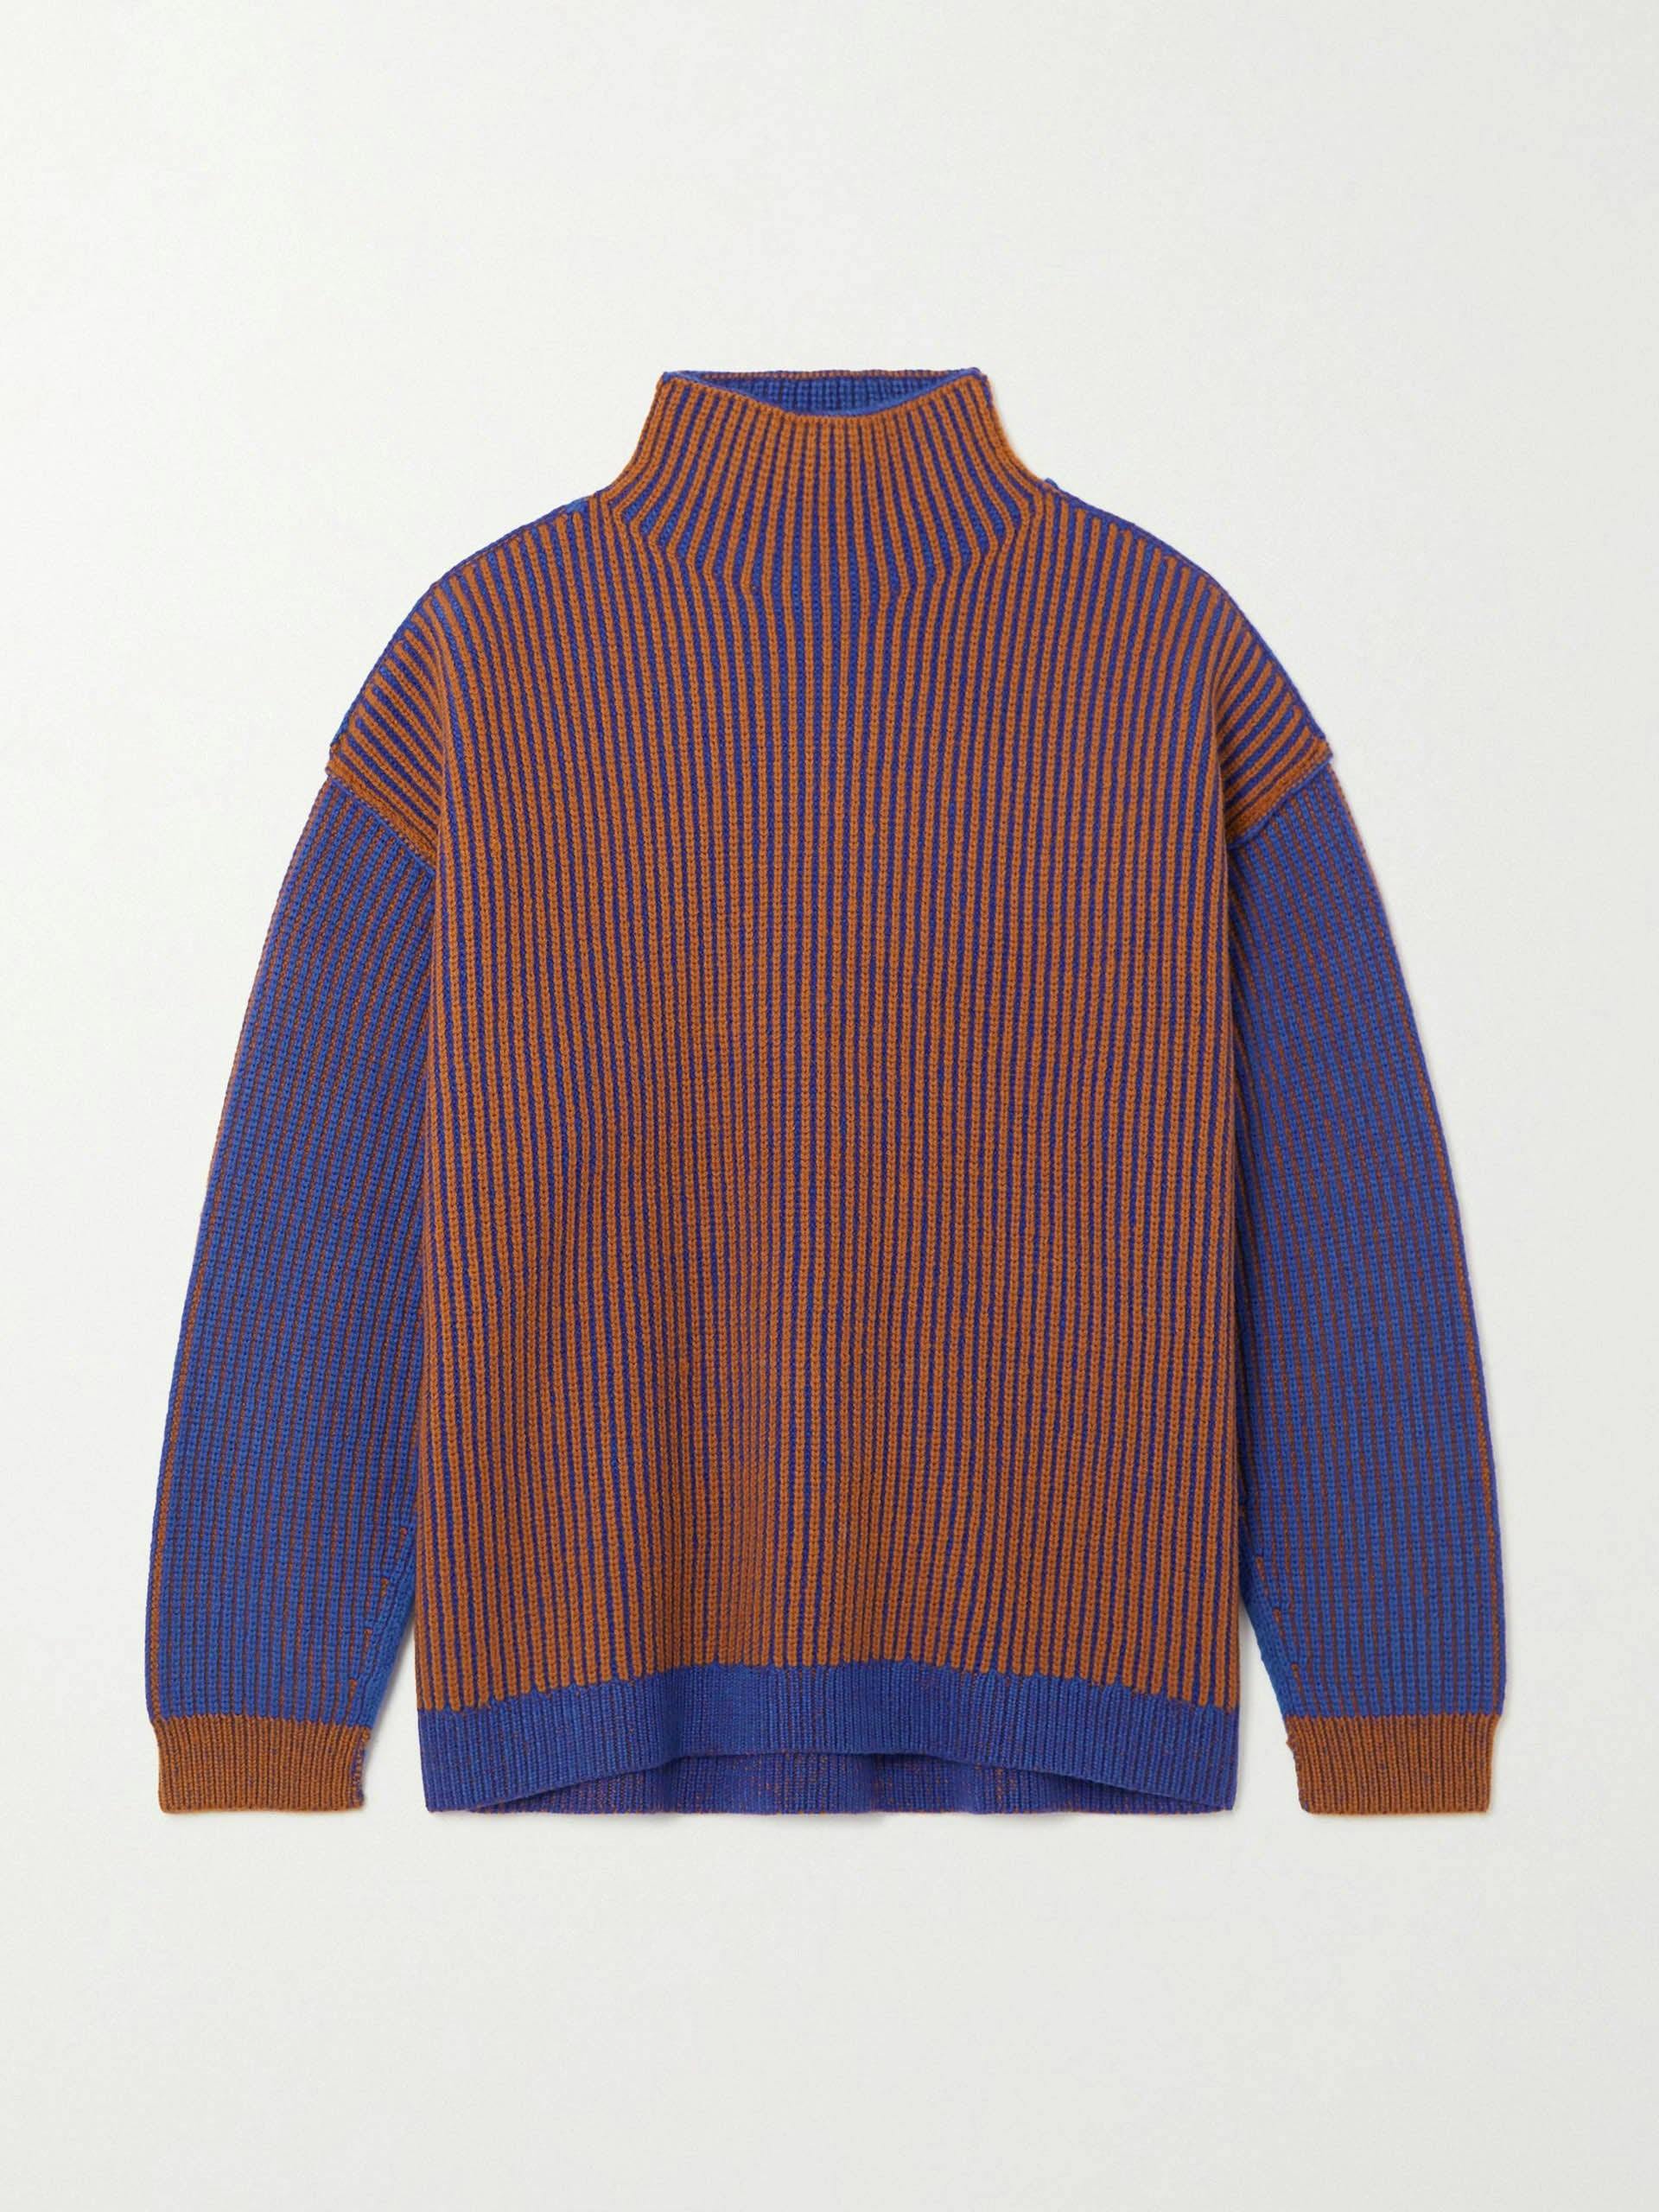 Two-toned ribbed merino wool sweater